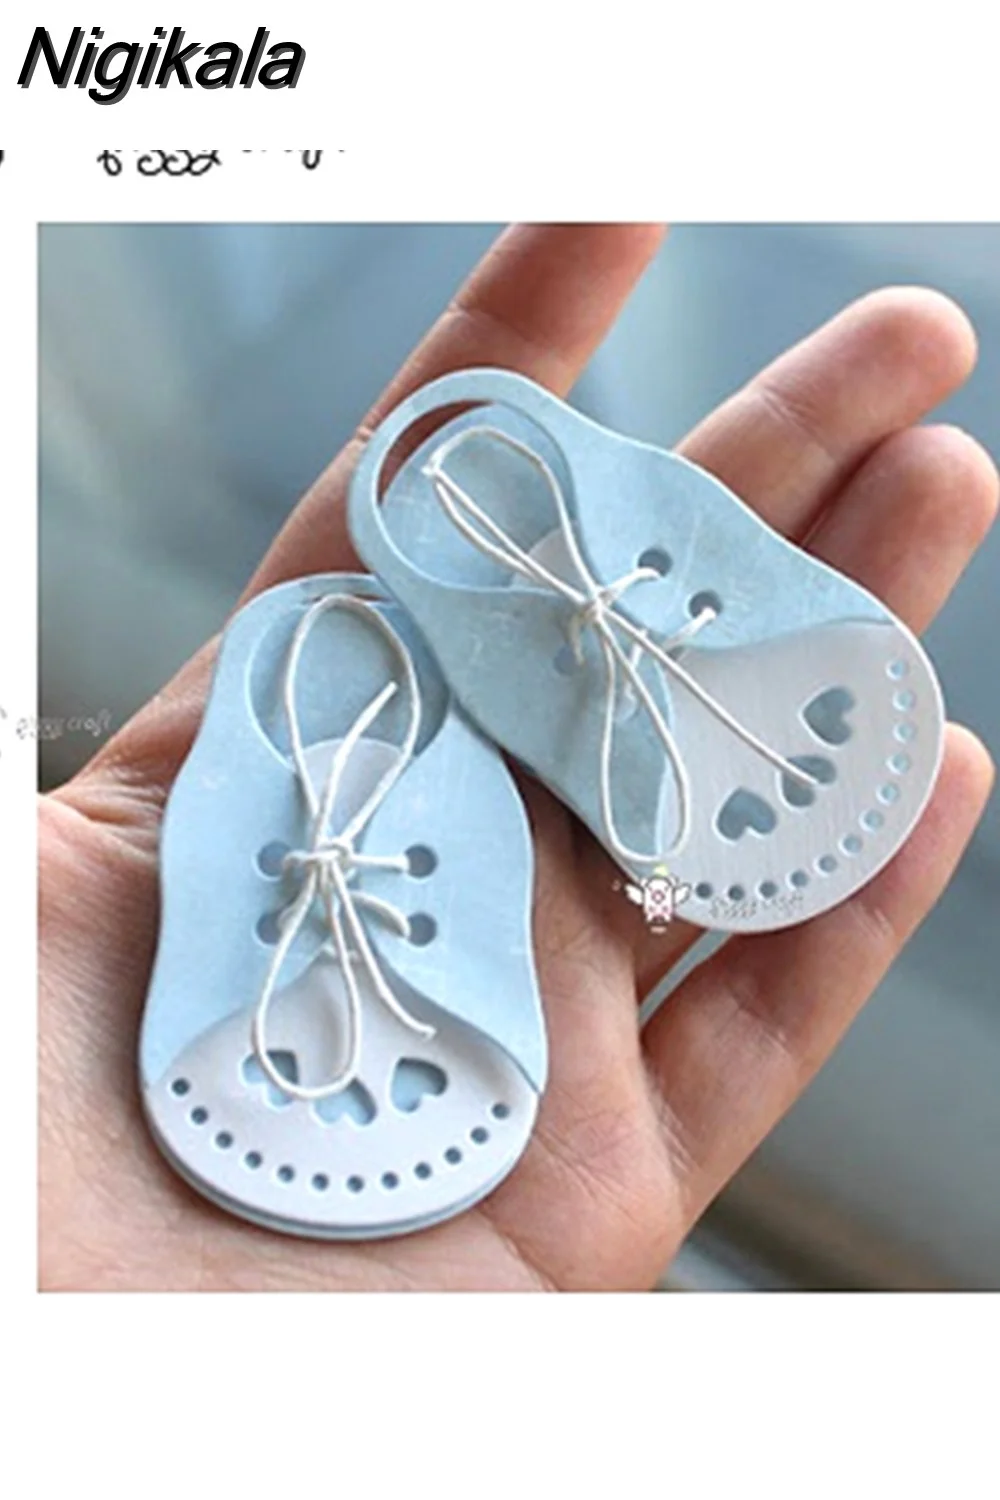 Nigikala Craft metal cutting dies cut die mold Baby shoes Scrapbook paper craft knife mould blade punch stencils dies